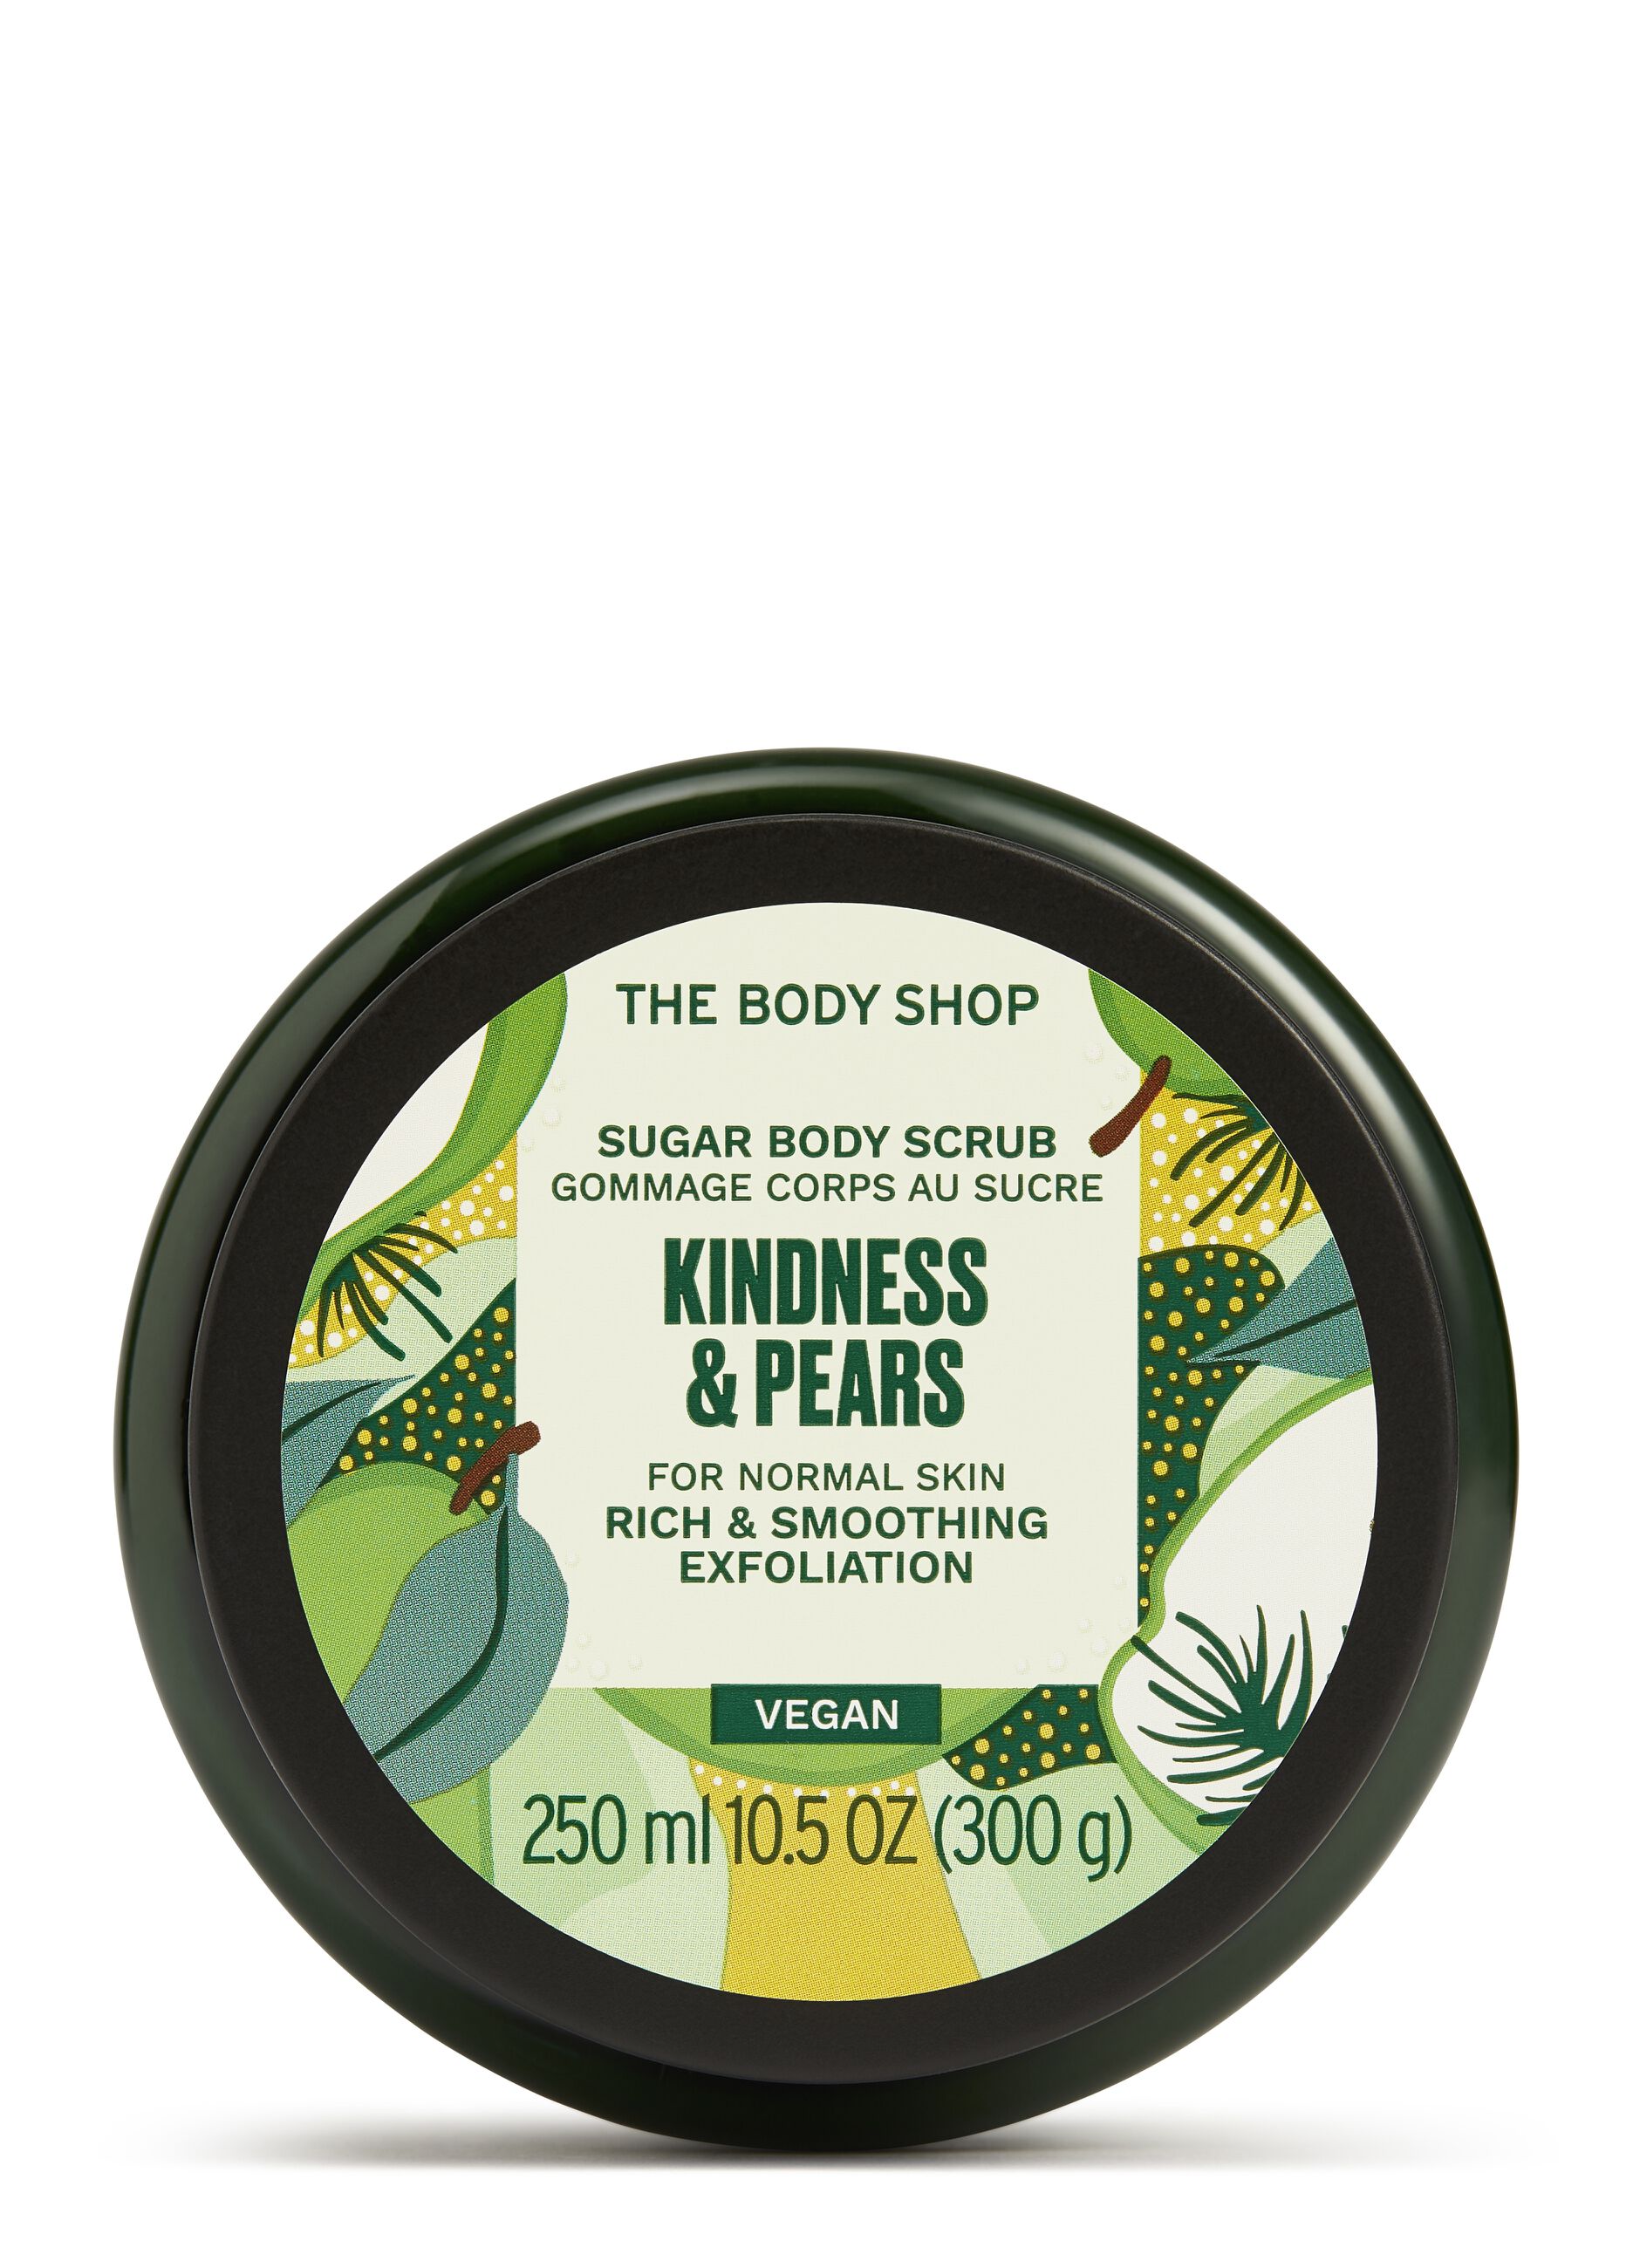 Exfoliante corporal Kindness & Pears 250 ml The Body Shop